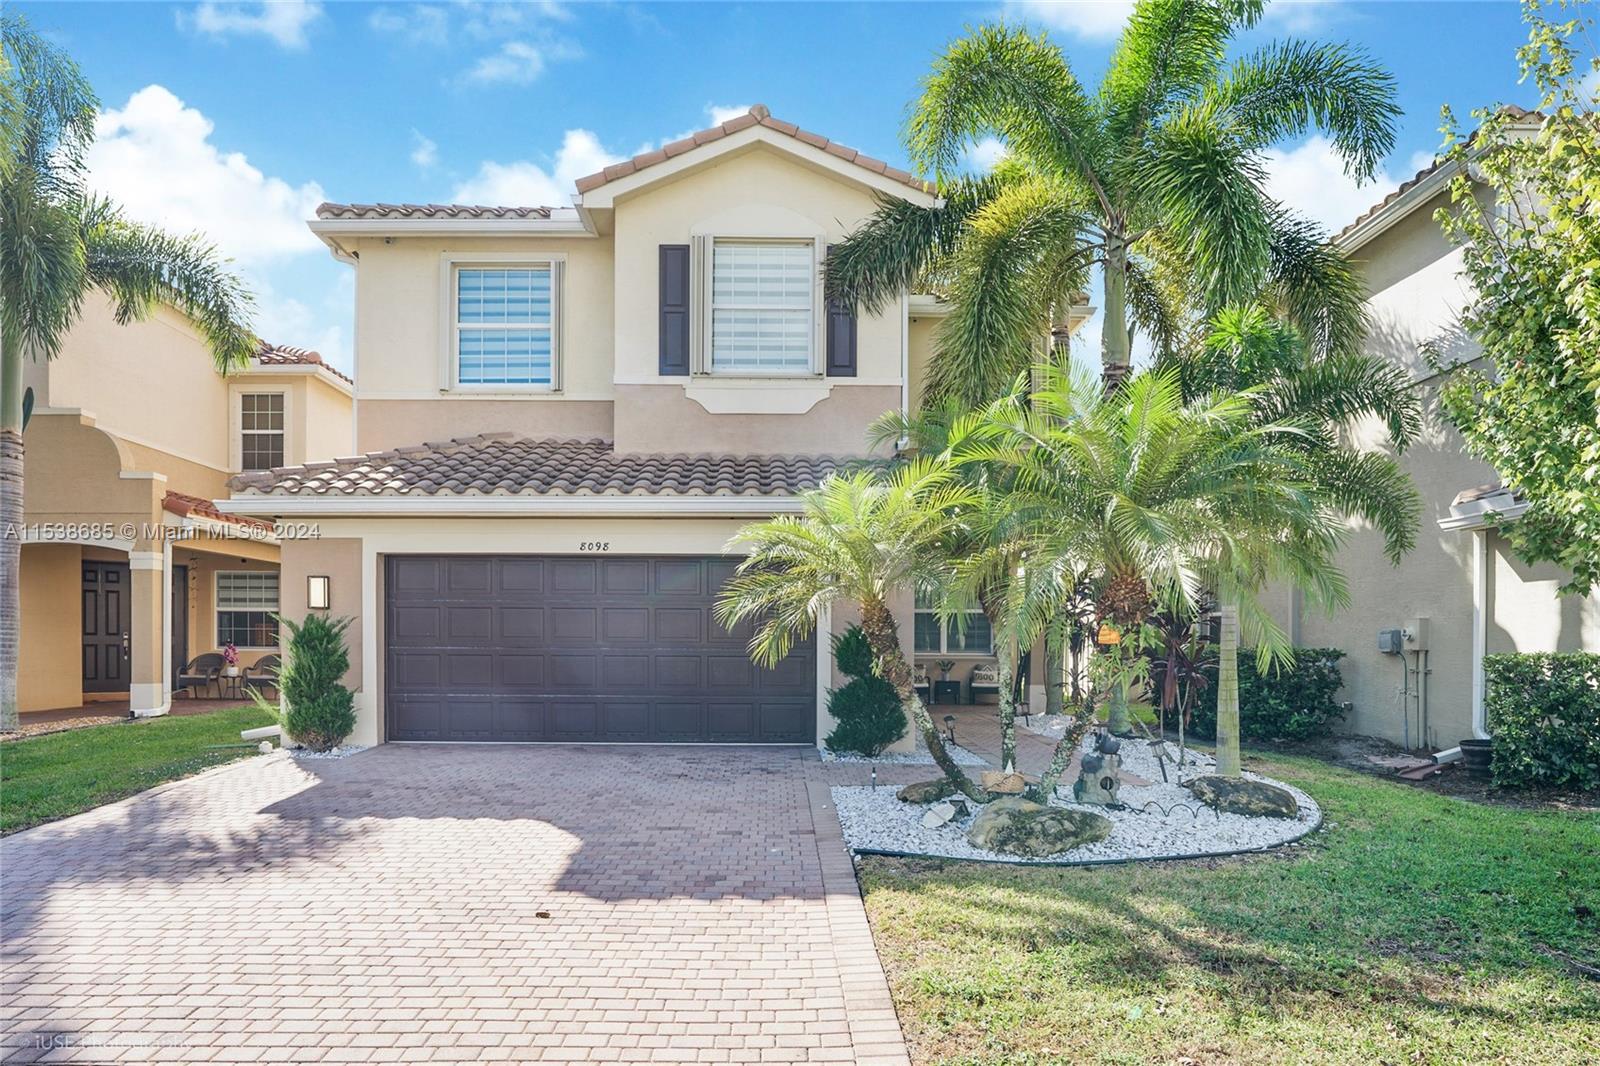 Property for Sale at 8098 Brigamar Isles Ave, Boynton Beach, Palm Beach County, Florida - Bedrooms: 4 
Bathrooms: 4  - $855,000